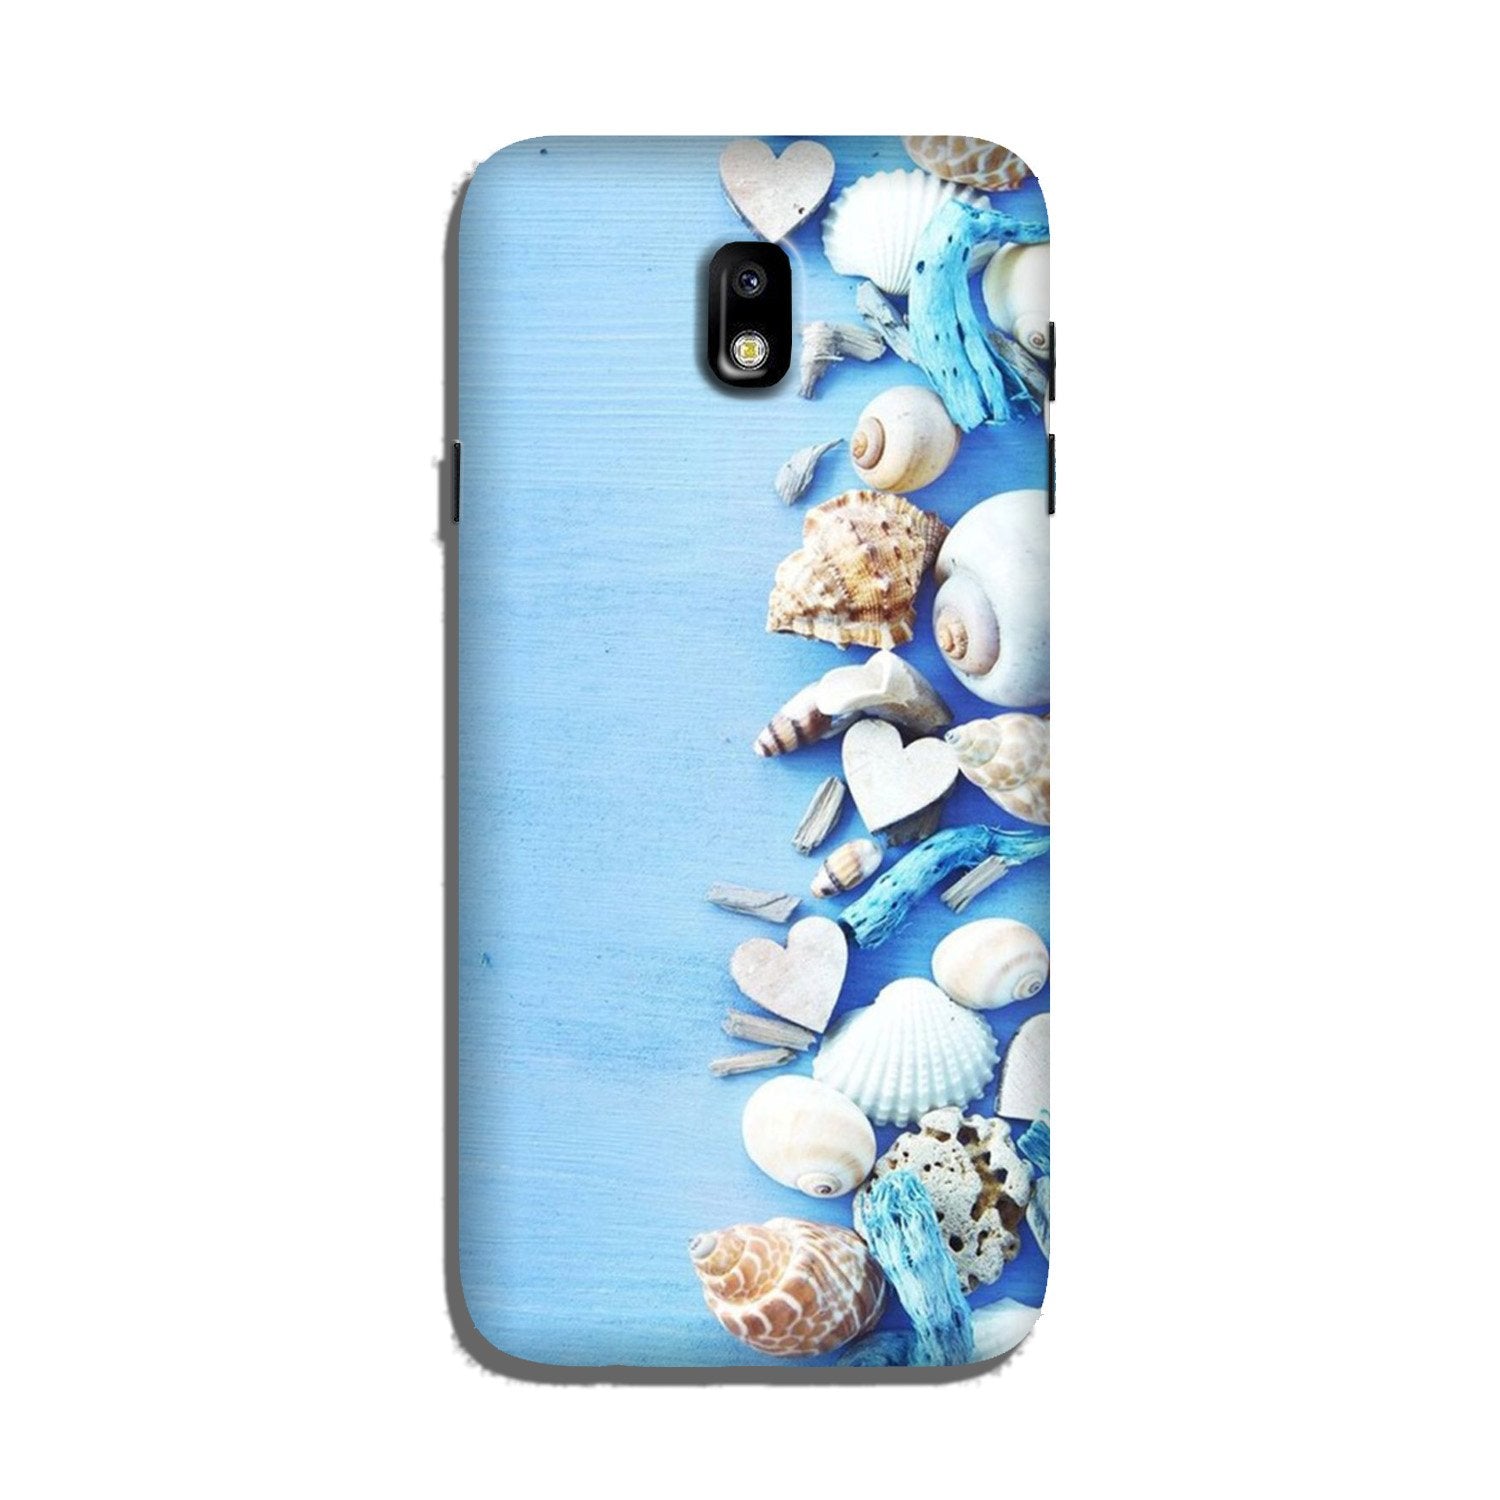 Sea Shells2 Case for Galaxy J3 Pro